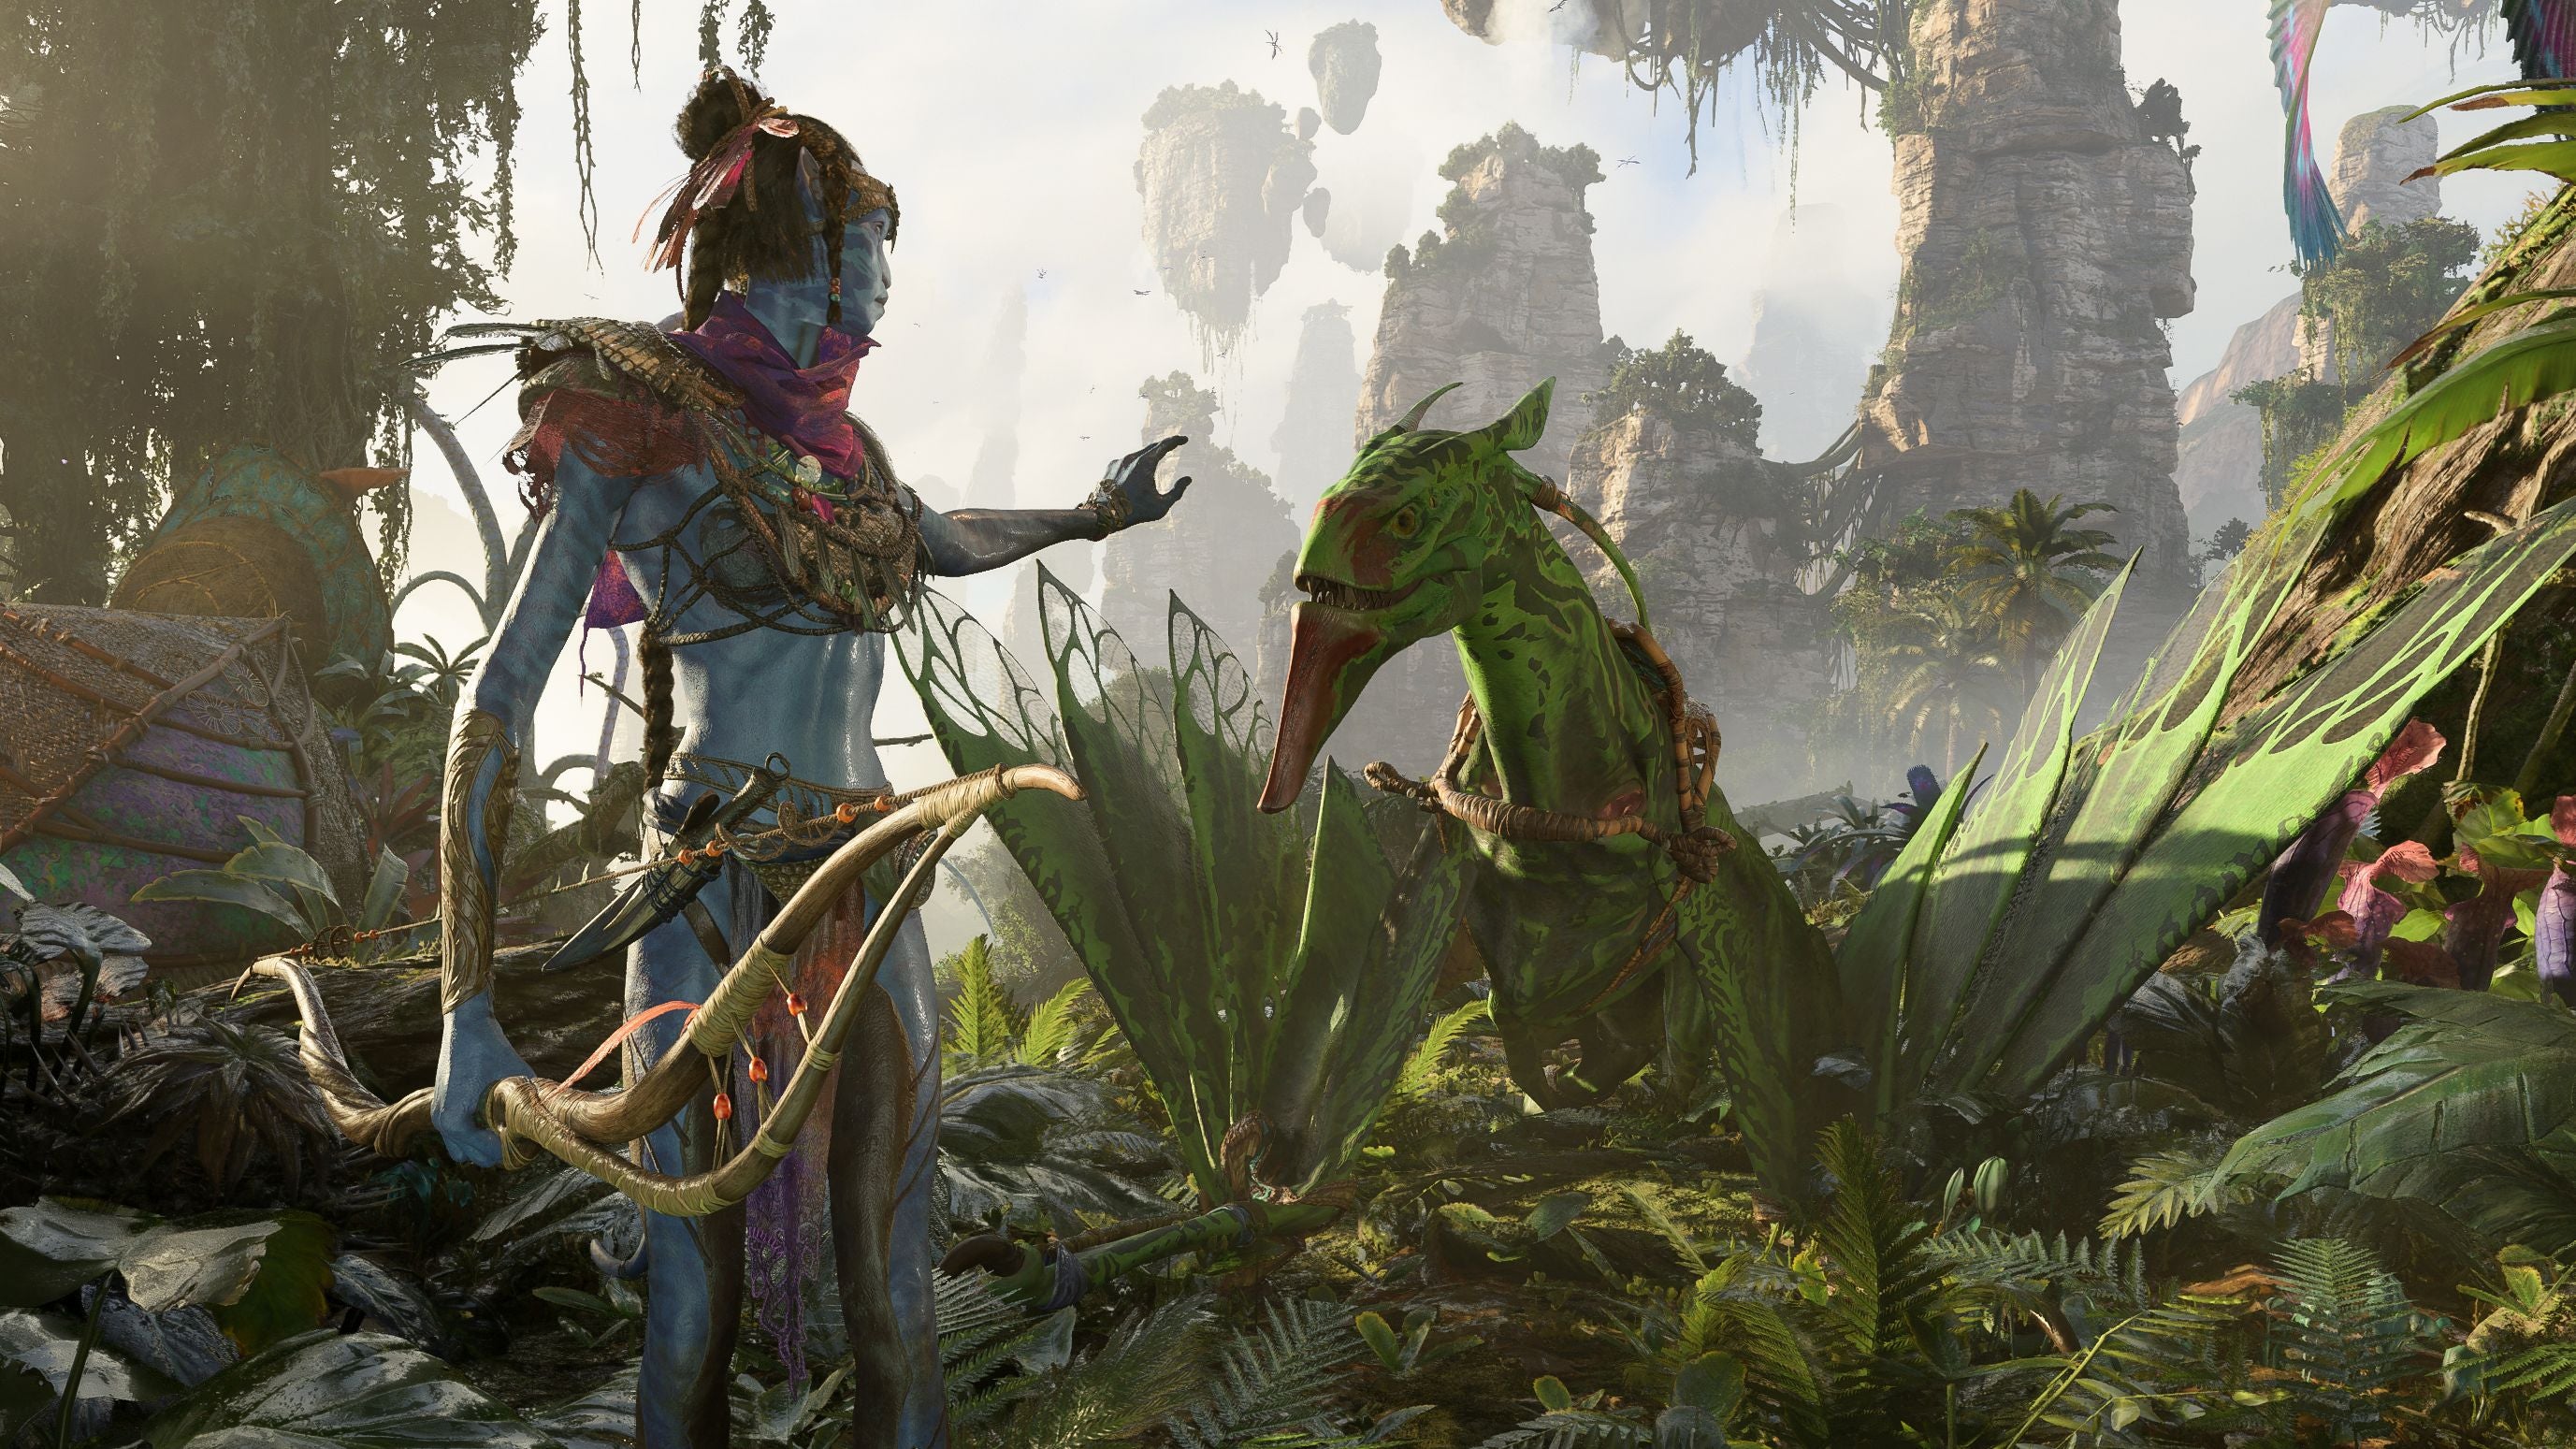 A Na'vi warrior befriending a banshee - a green flying lizard pal - in a screenshot from the Avatar Frontiers Of Pandora game